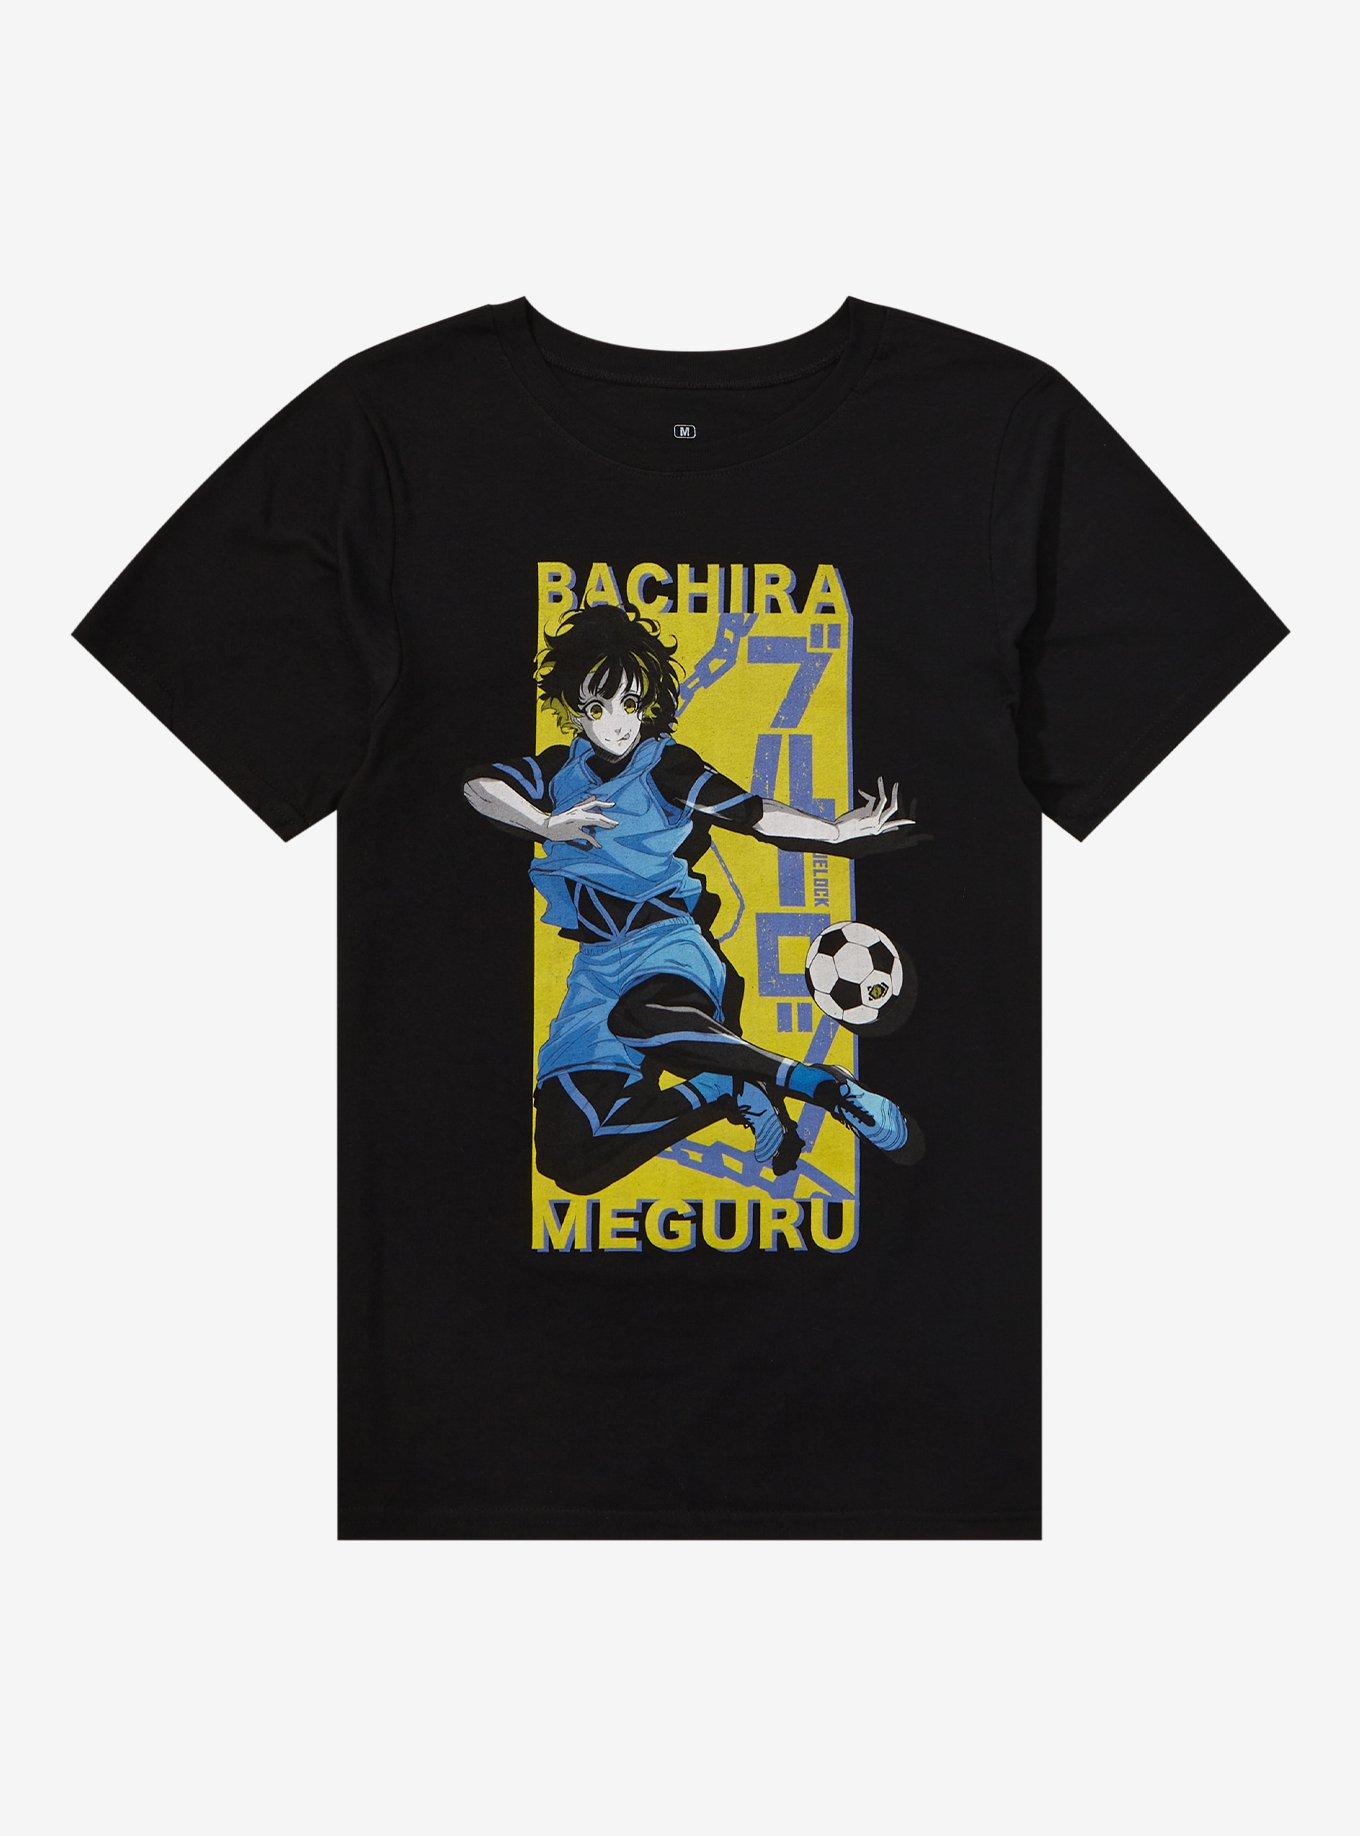 Iconic Moments Blue Lock Bachira Meguru shirt